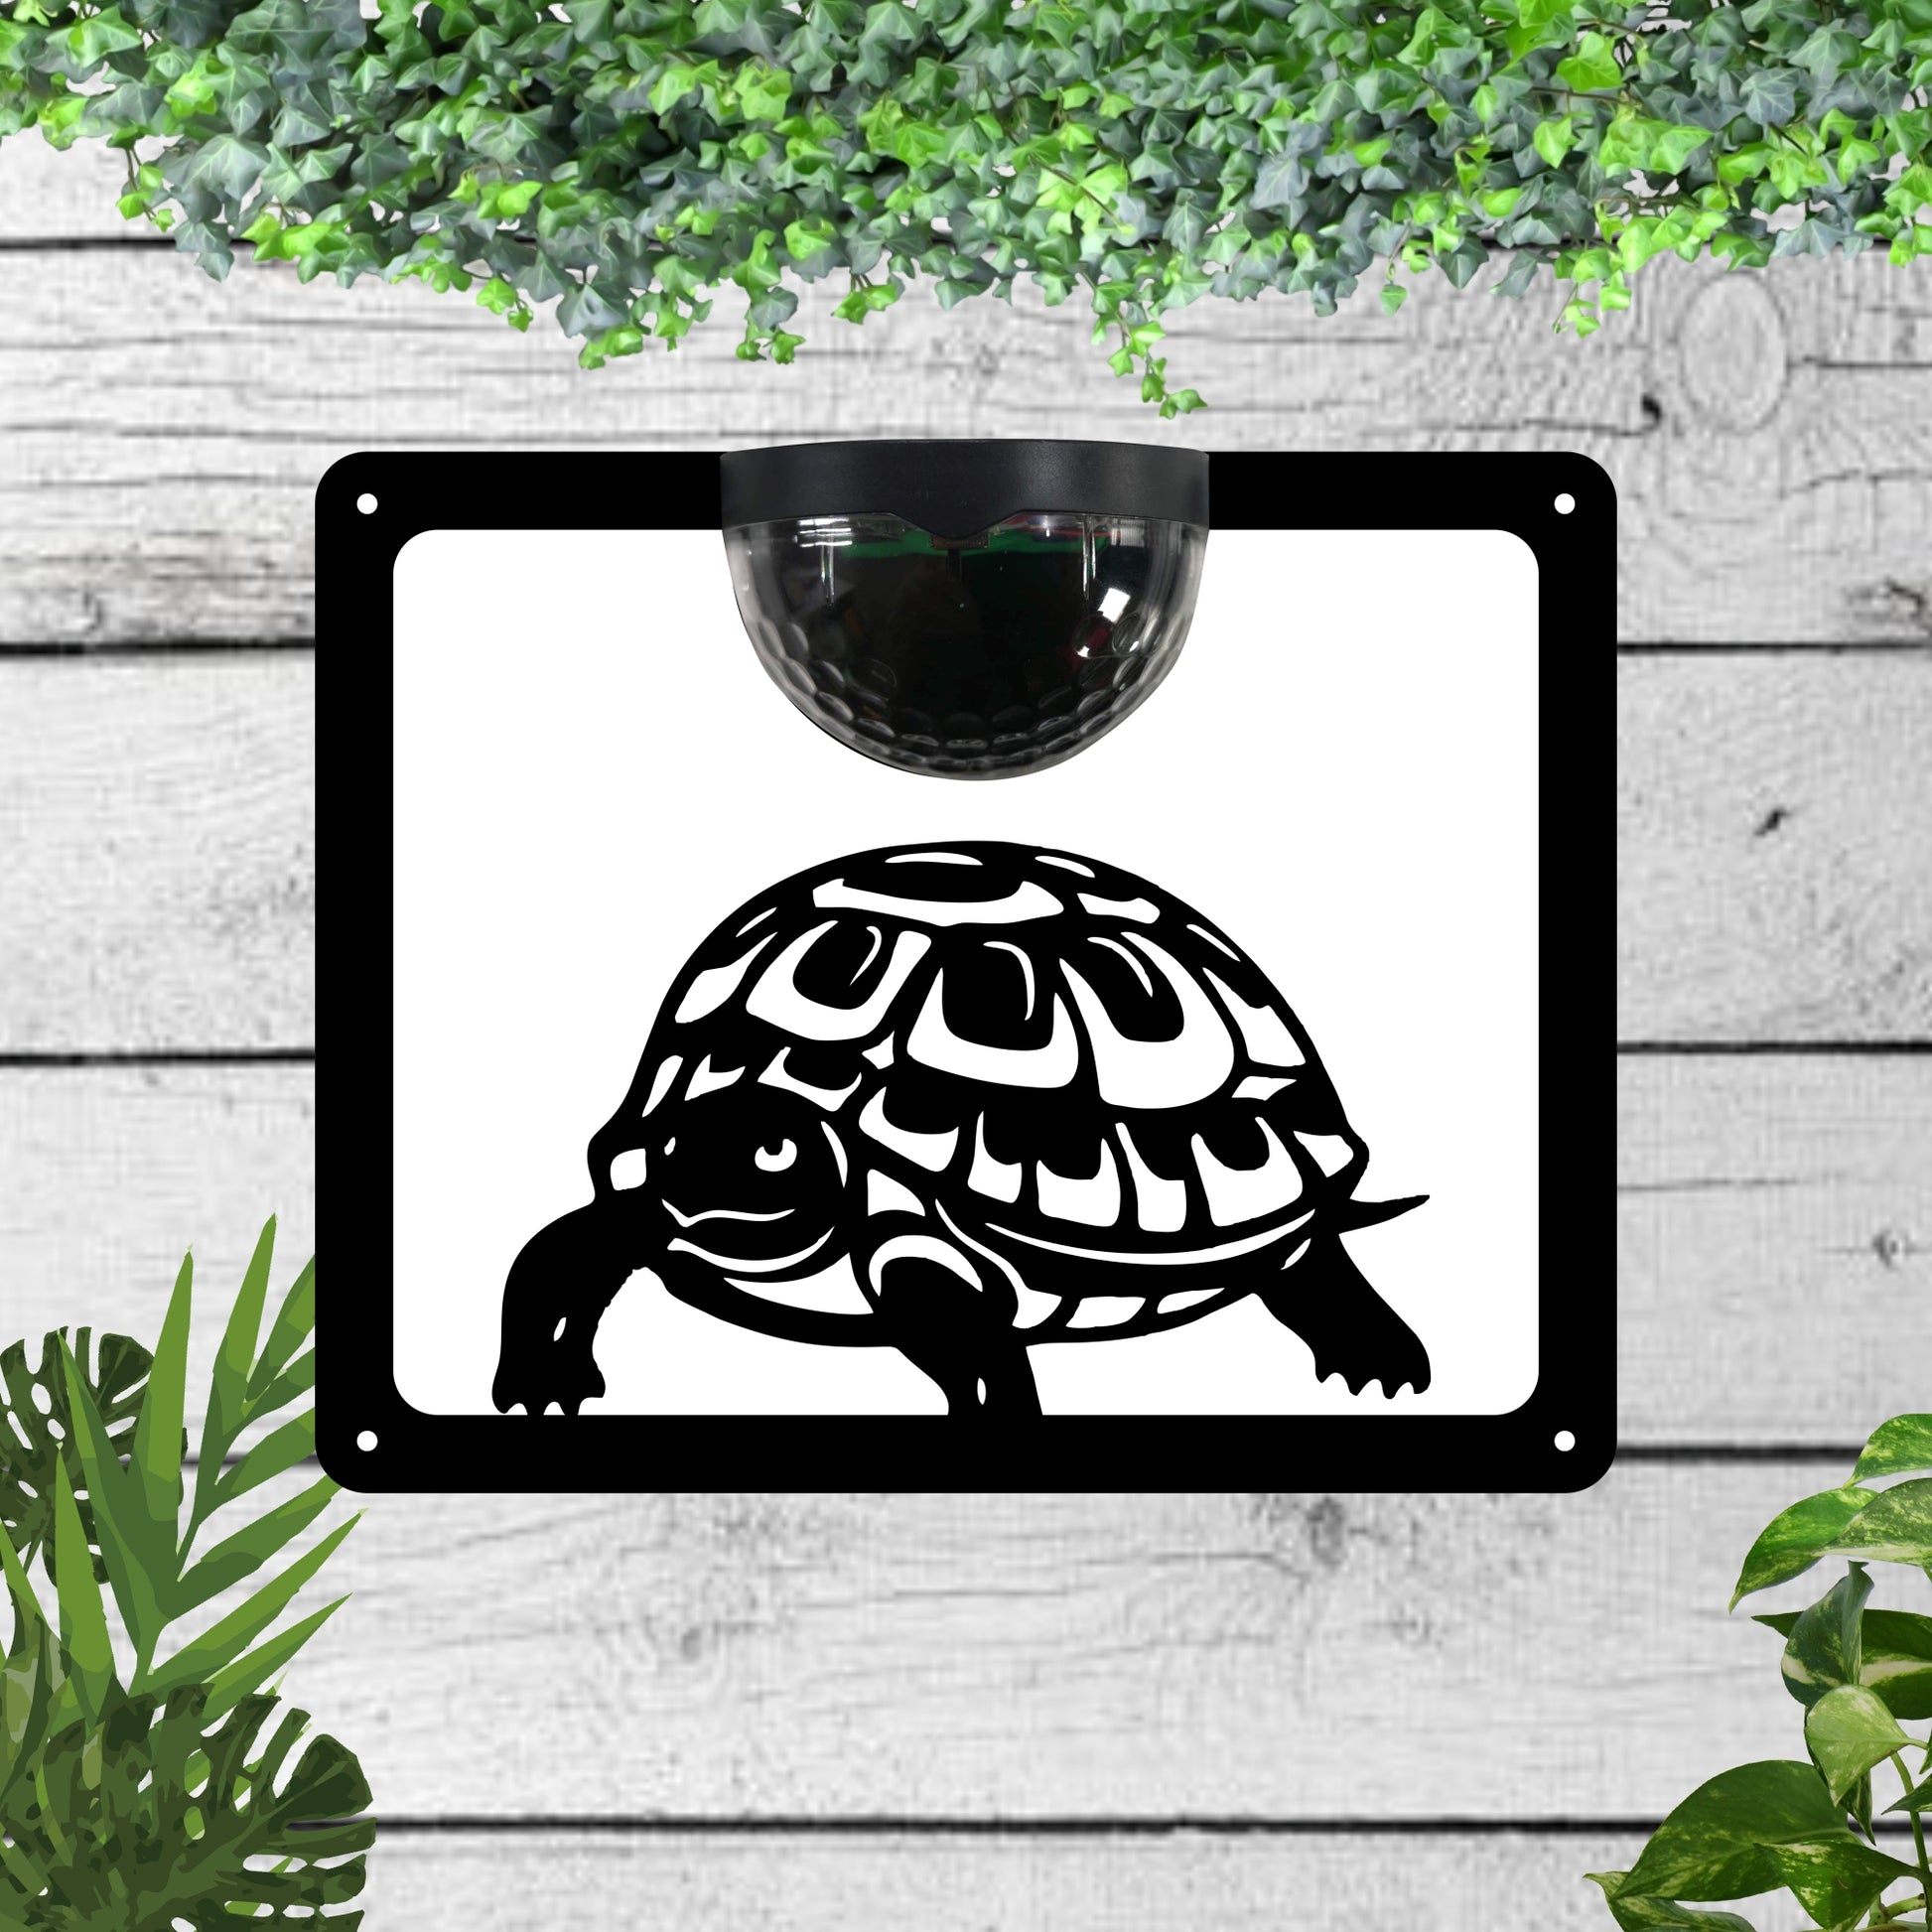 Garden Solar Light Wall Plaque With a Tortoise | John Alans